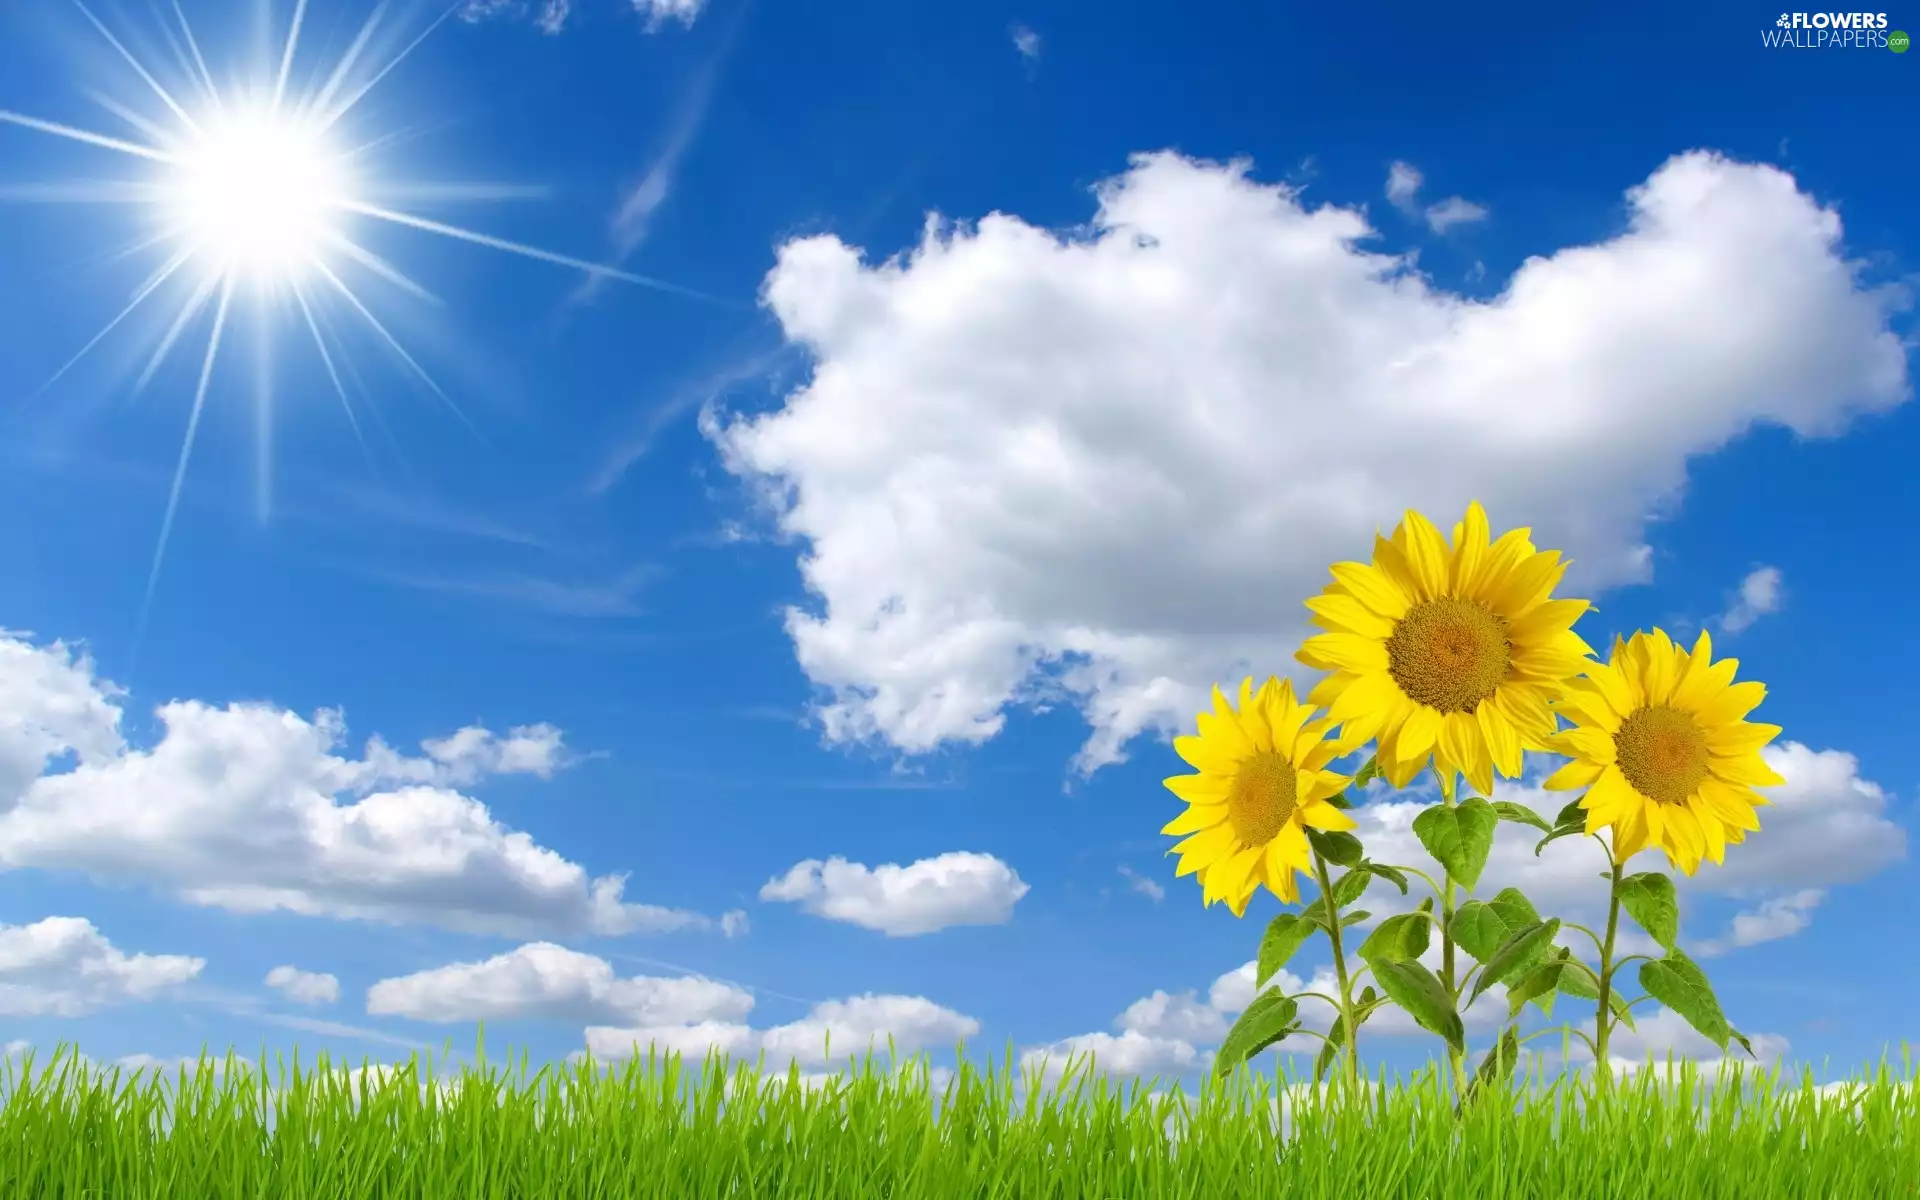 Sky, grass, Nice sunflowers, sun